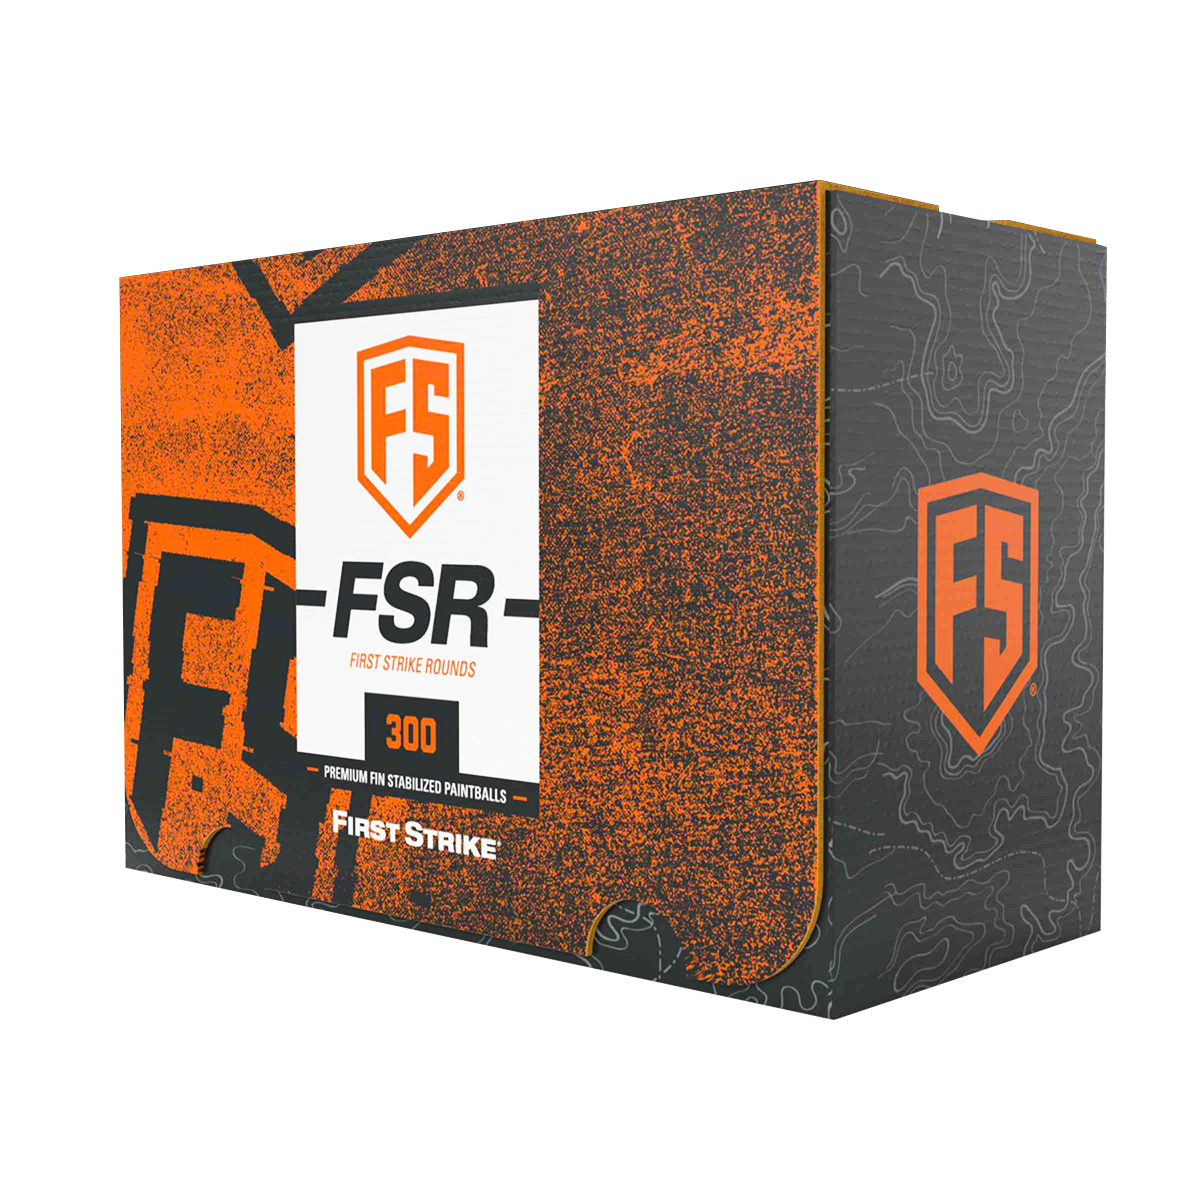 First Strike FSR 300 .68 Kaliber Orange/Orange